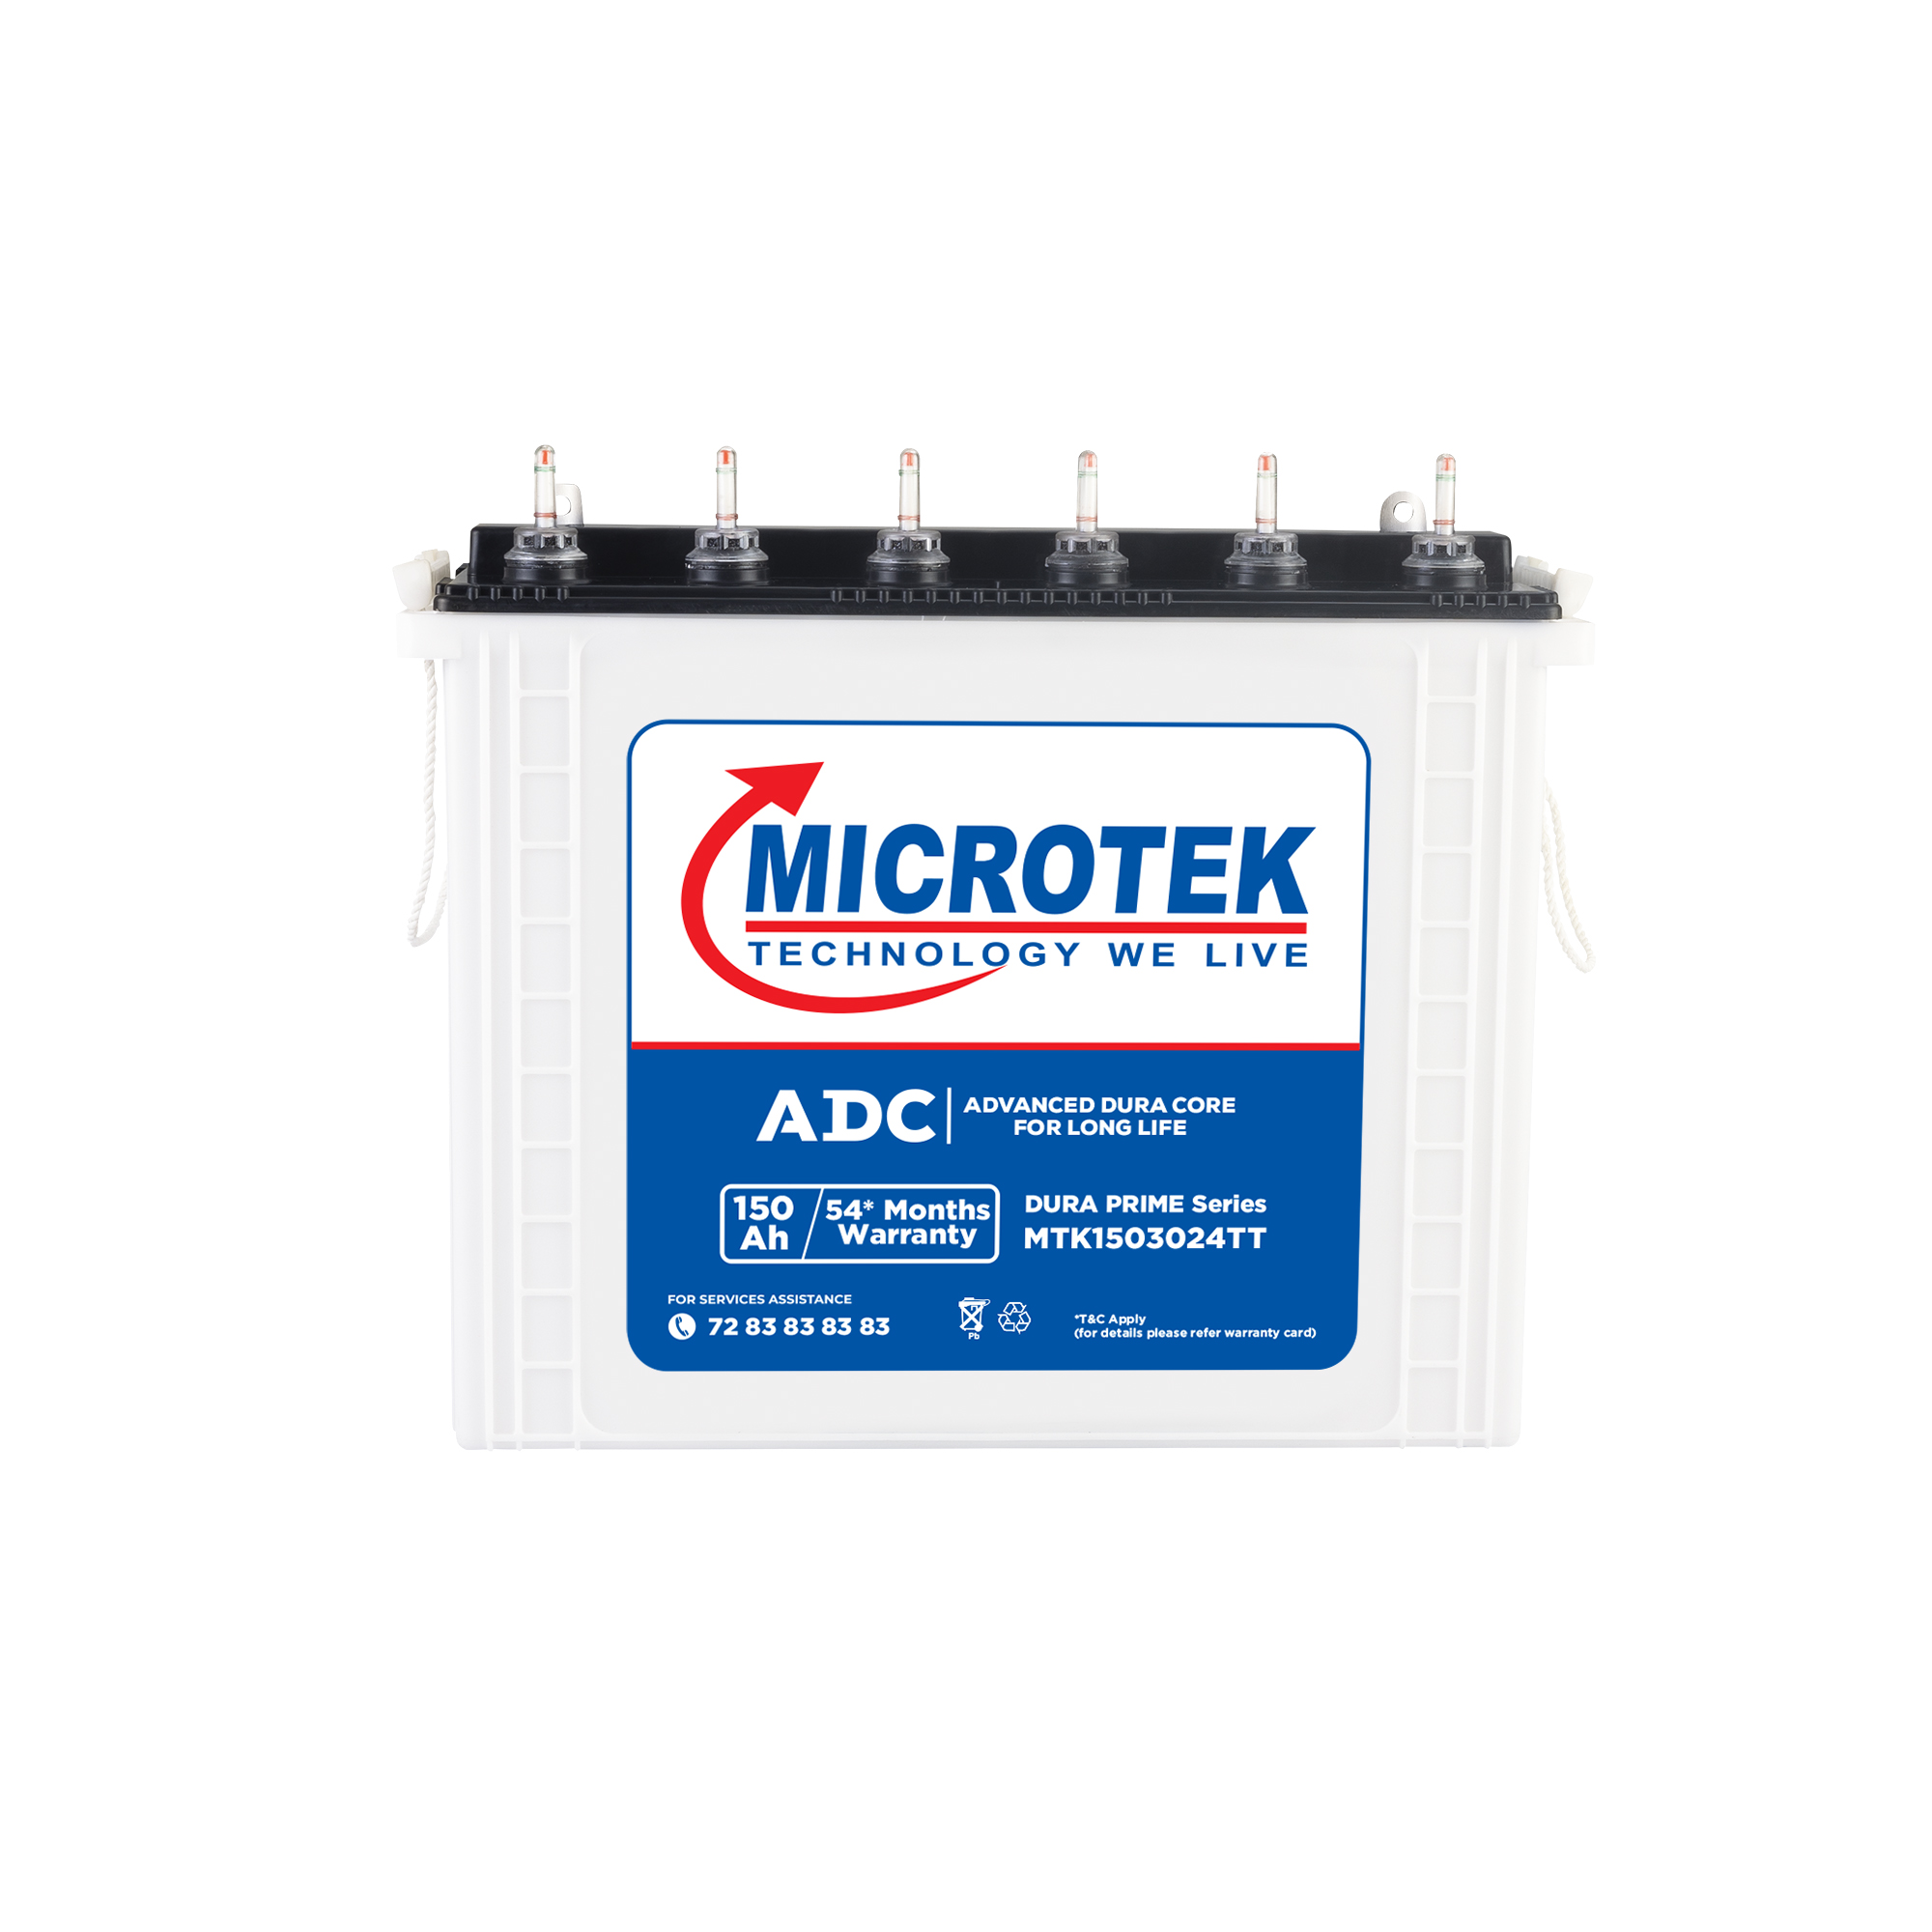 Microtek Dura Prime MTK1503024TT 150Ah/12V Inverter Battery With Advanced Dura Core Technology